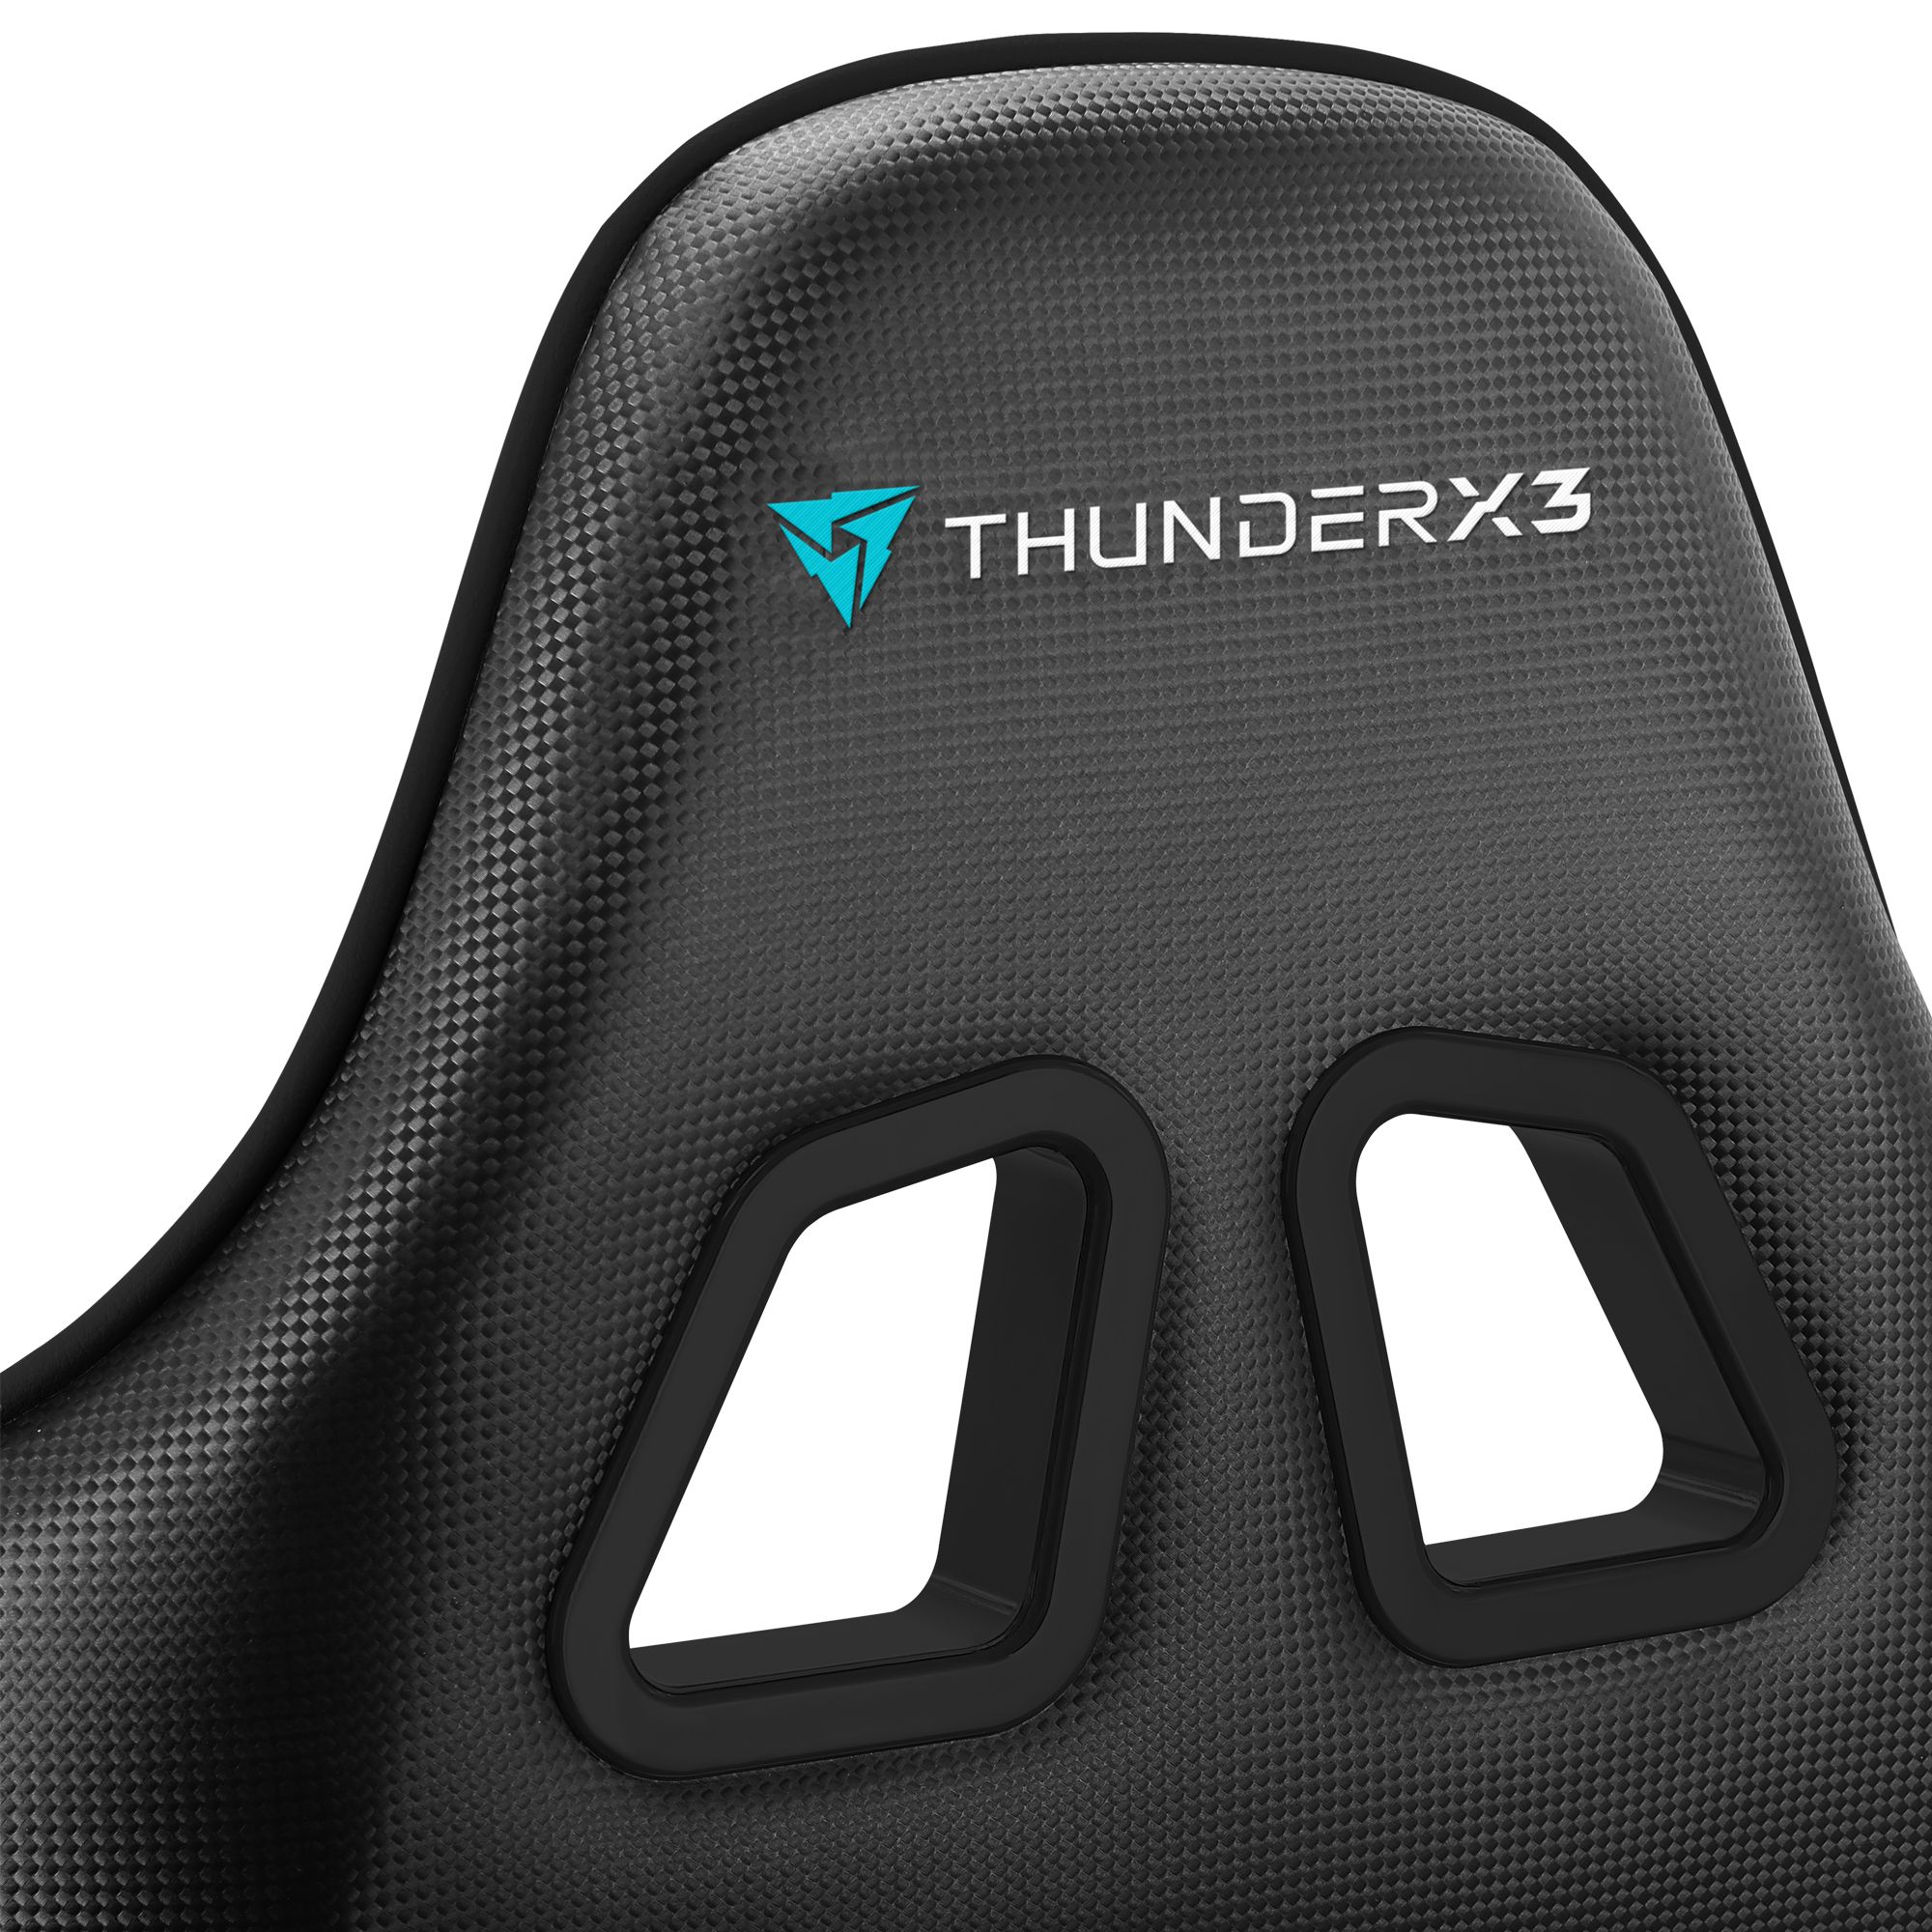 ThunderX3 EC3BK video game chair PC gaming chair Padded seat Black_6